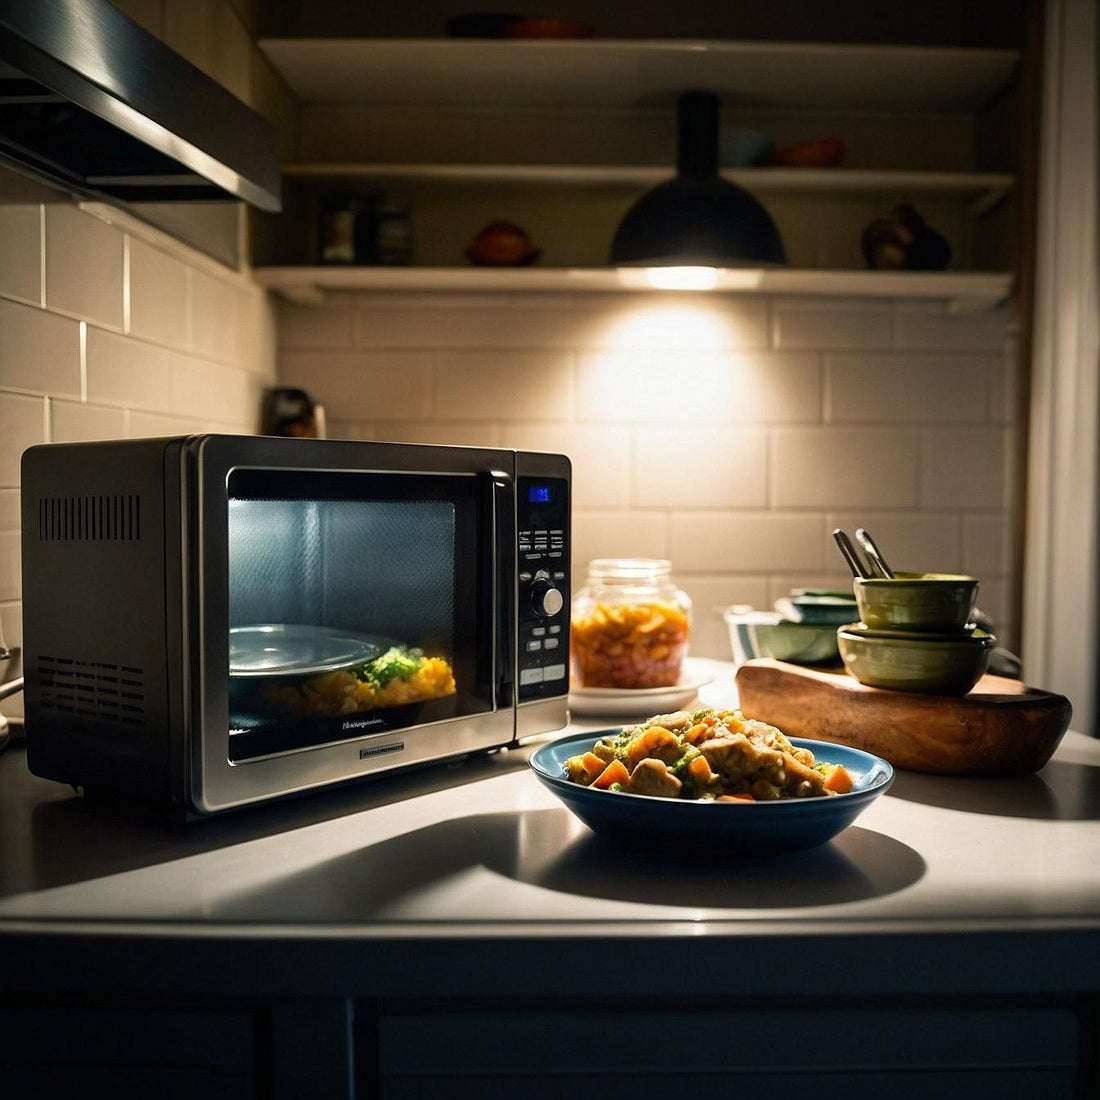 Do Lean Cuisine Favorites Microwave Dinners Expire Or Go Bad? - BargainBoxed.com